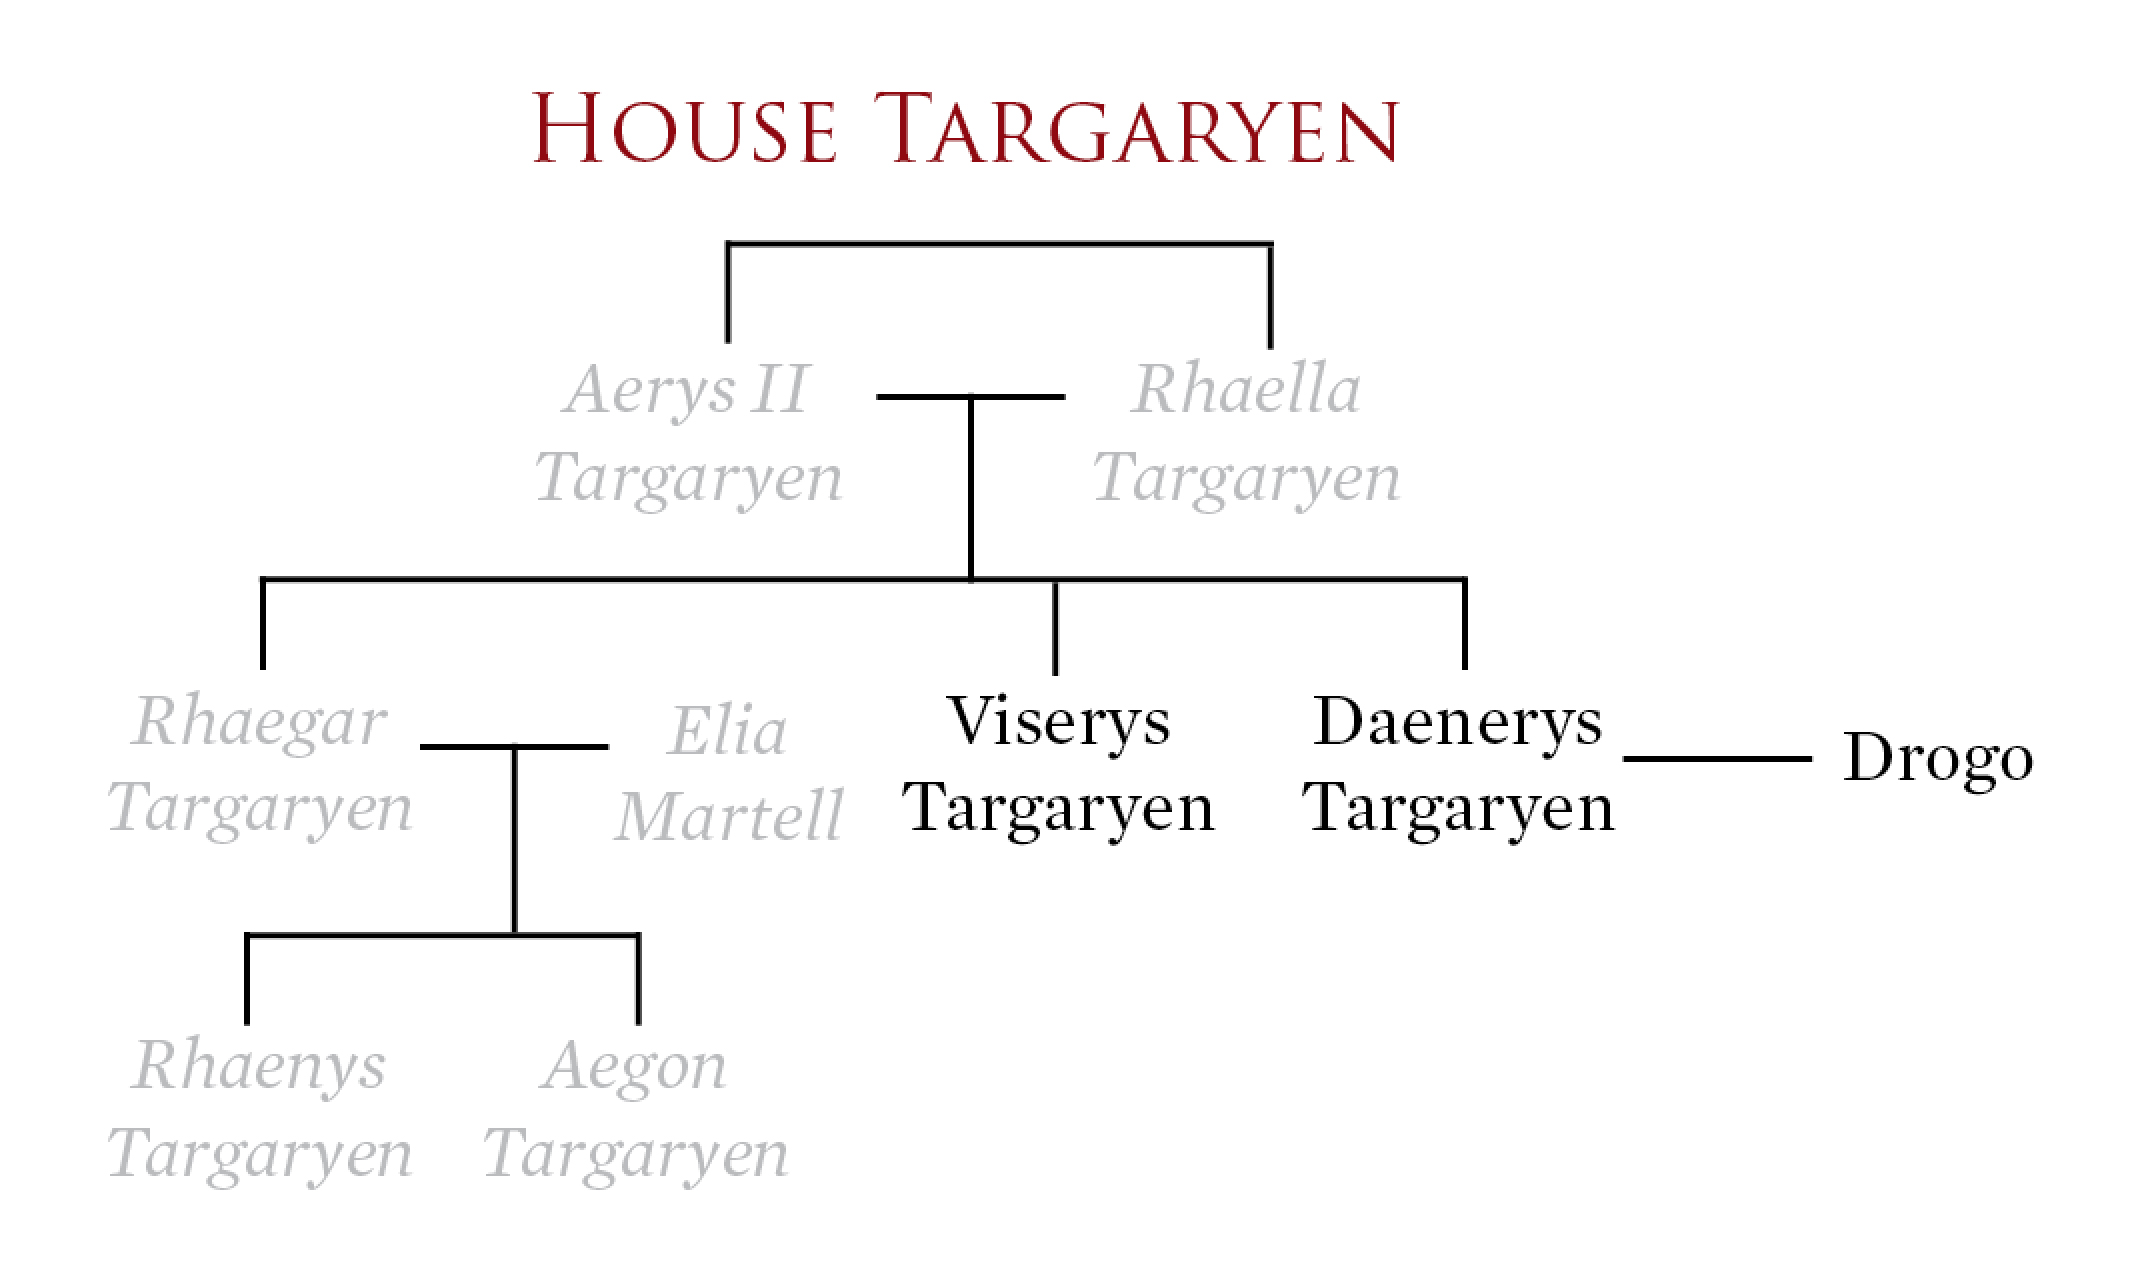 lannister family symbol